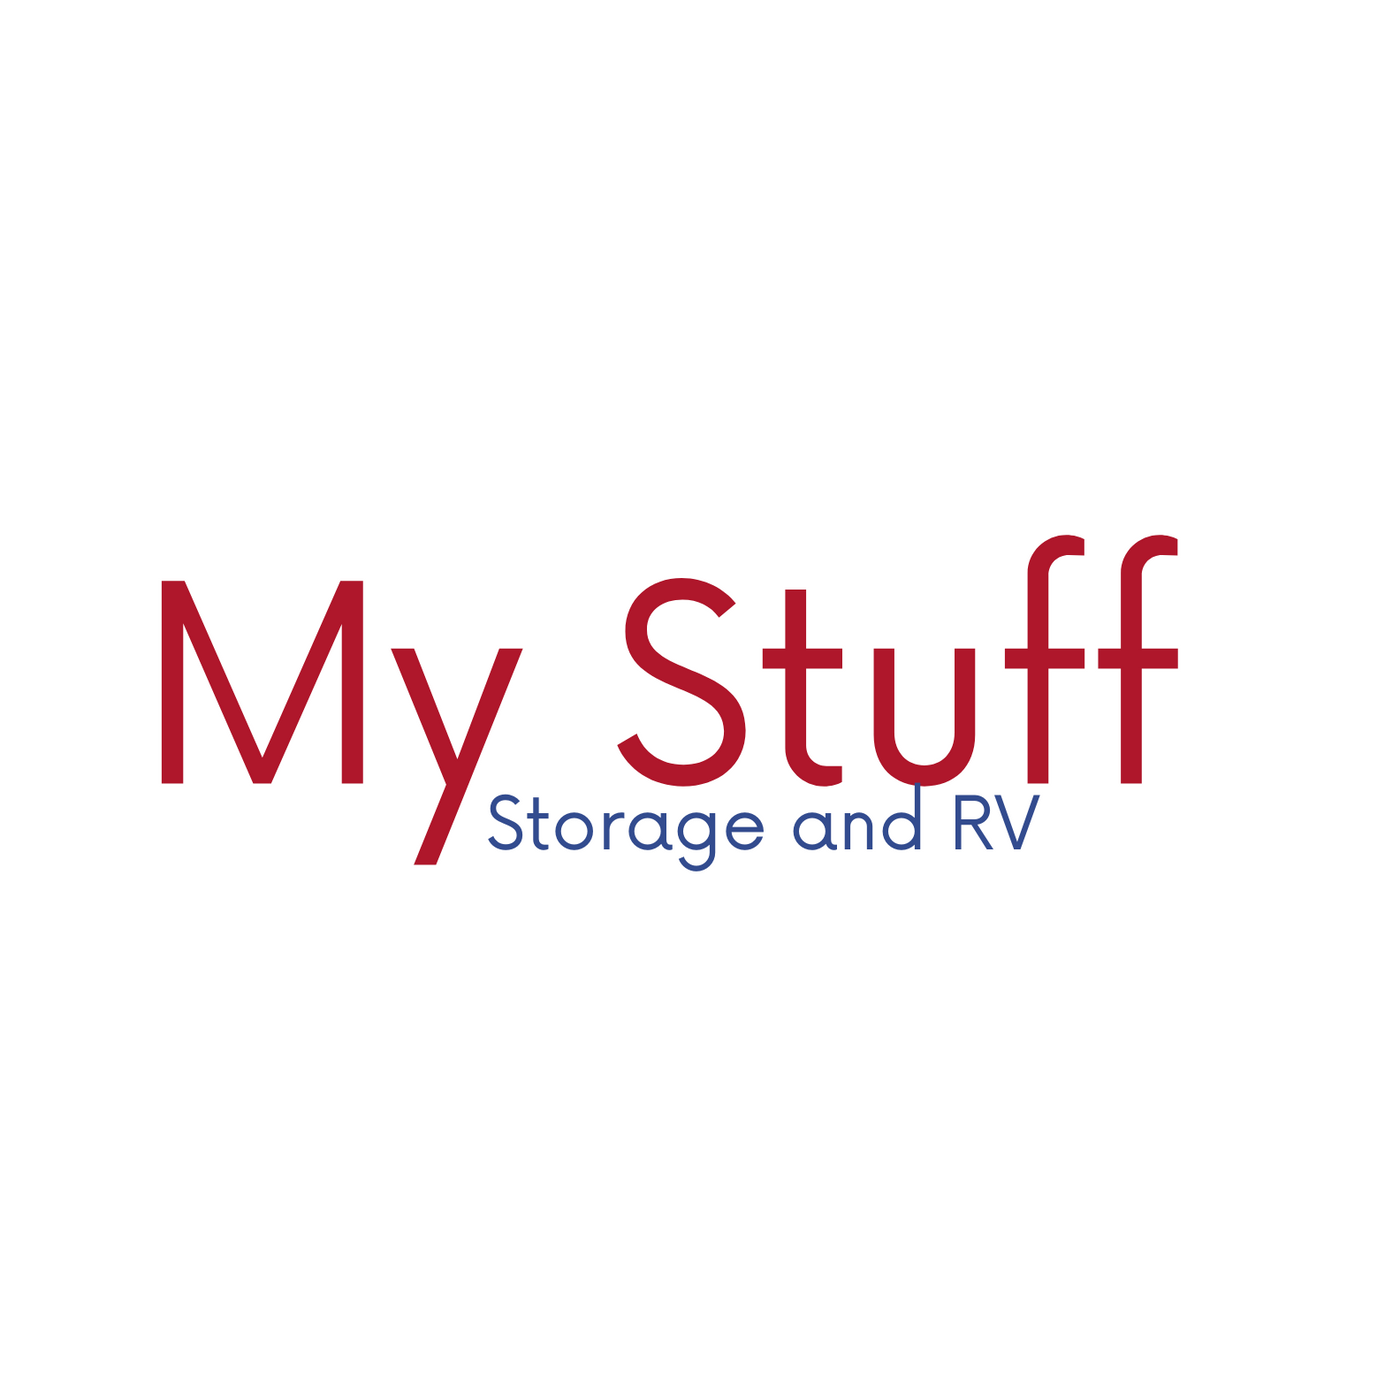 My Stuff Storage and RV